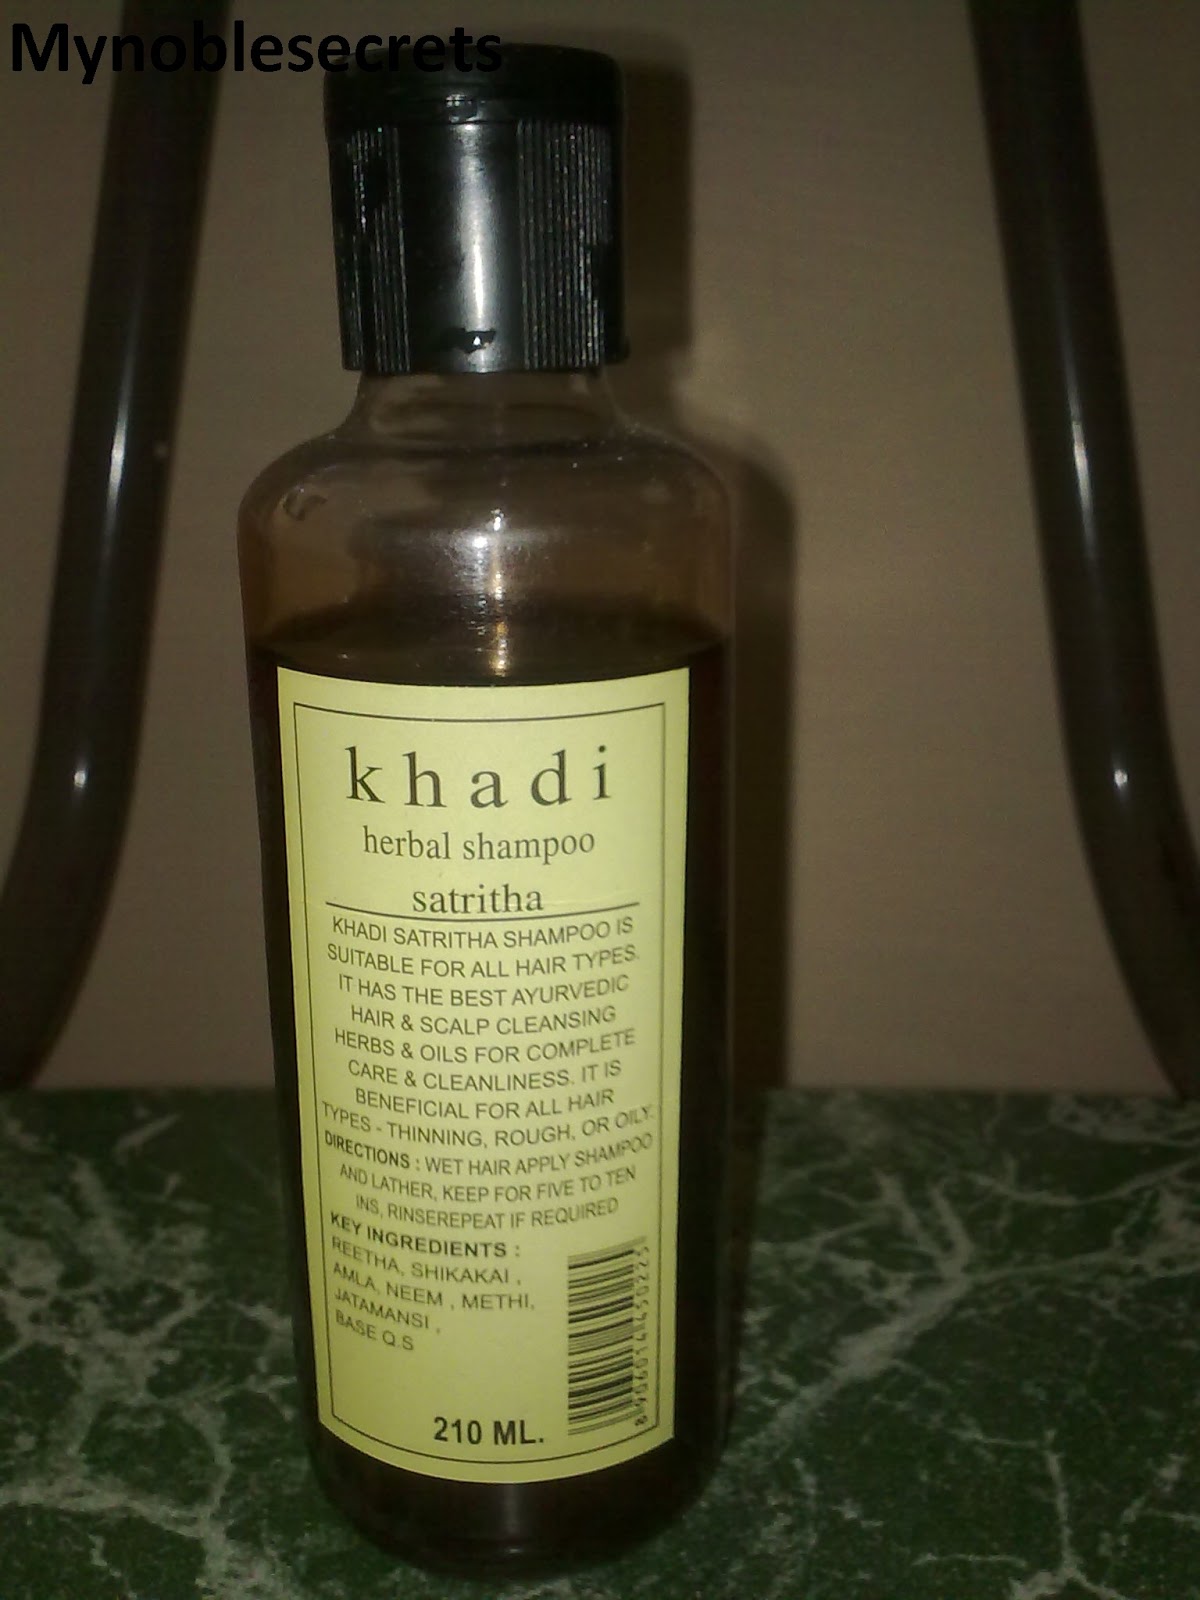 Indian Beauty Zone Khadi Herbal Shampoo Satritha Review